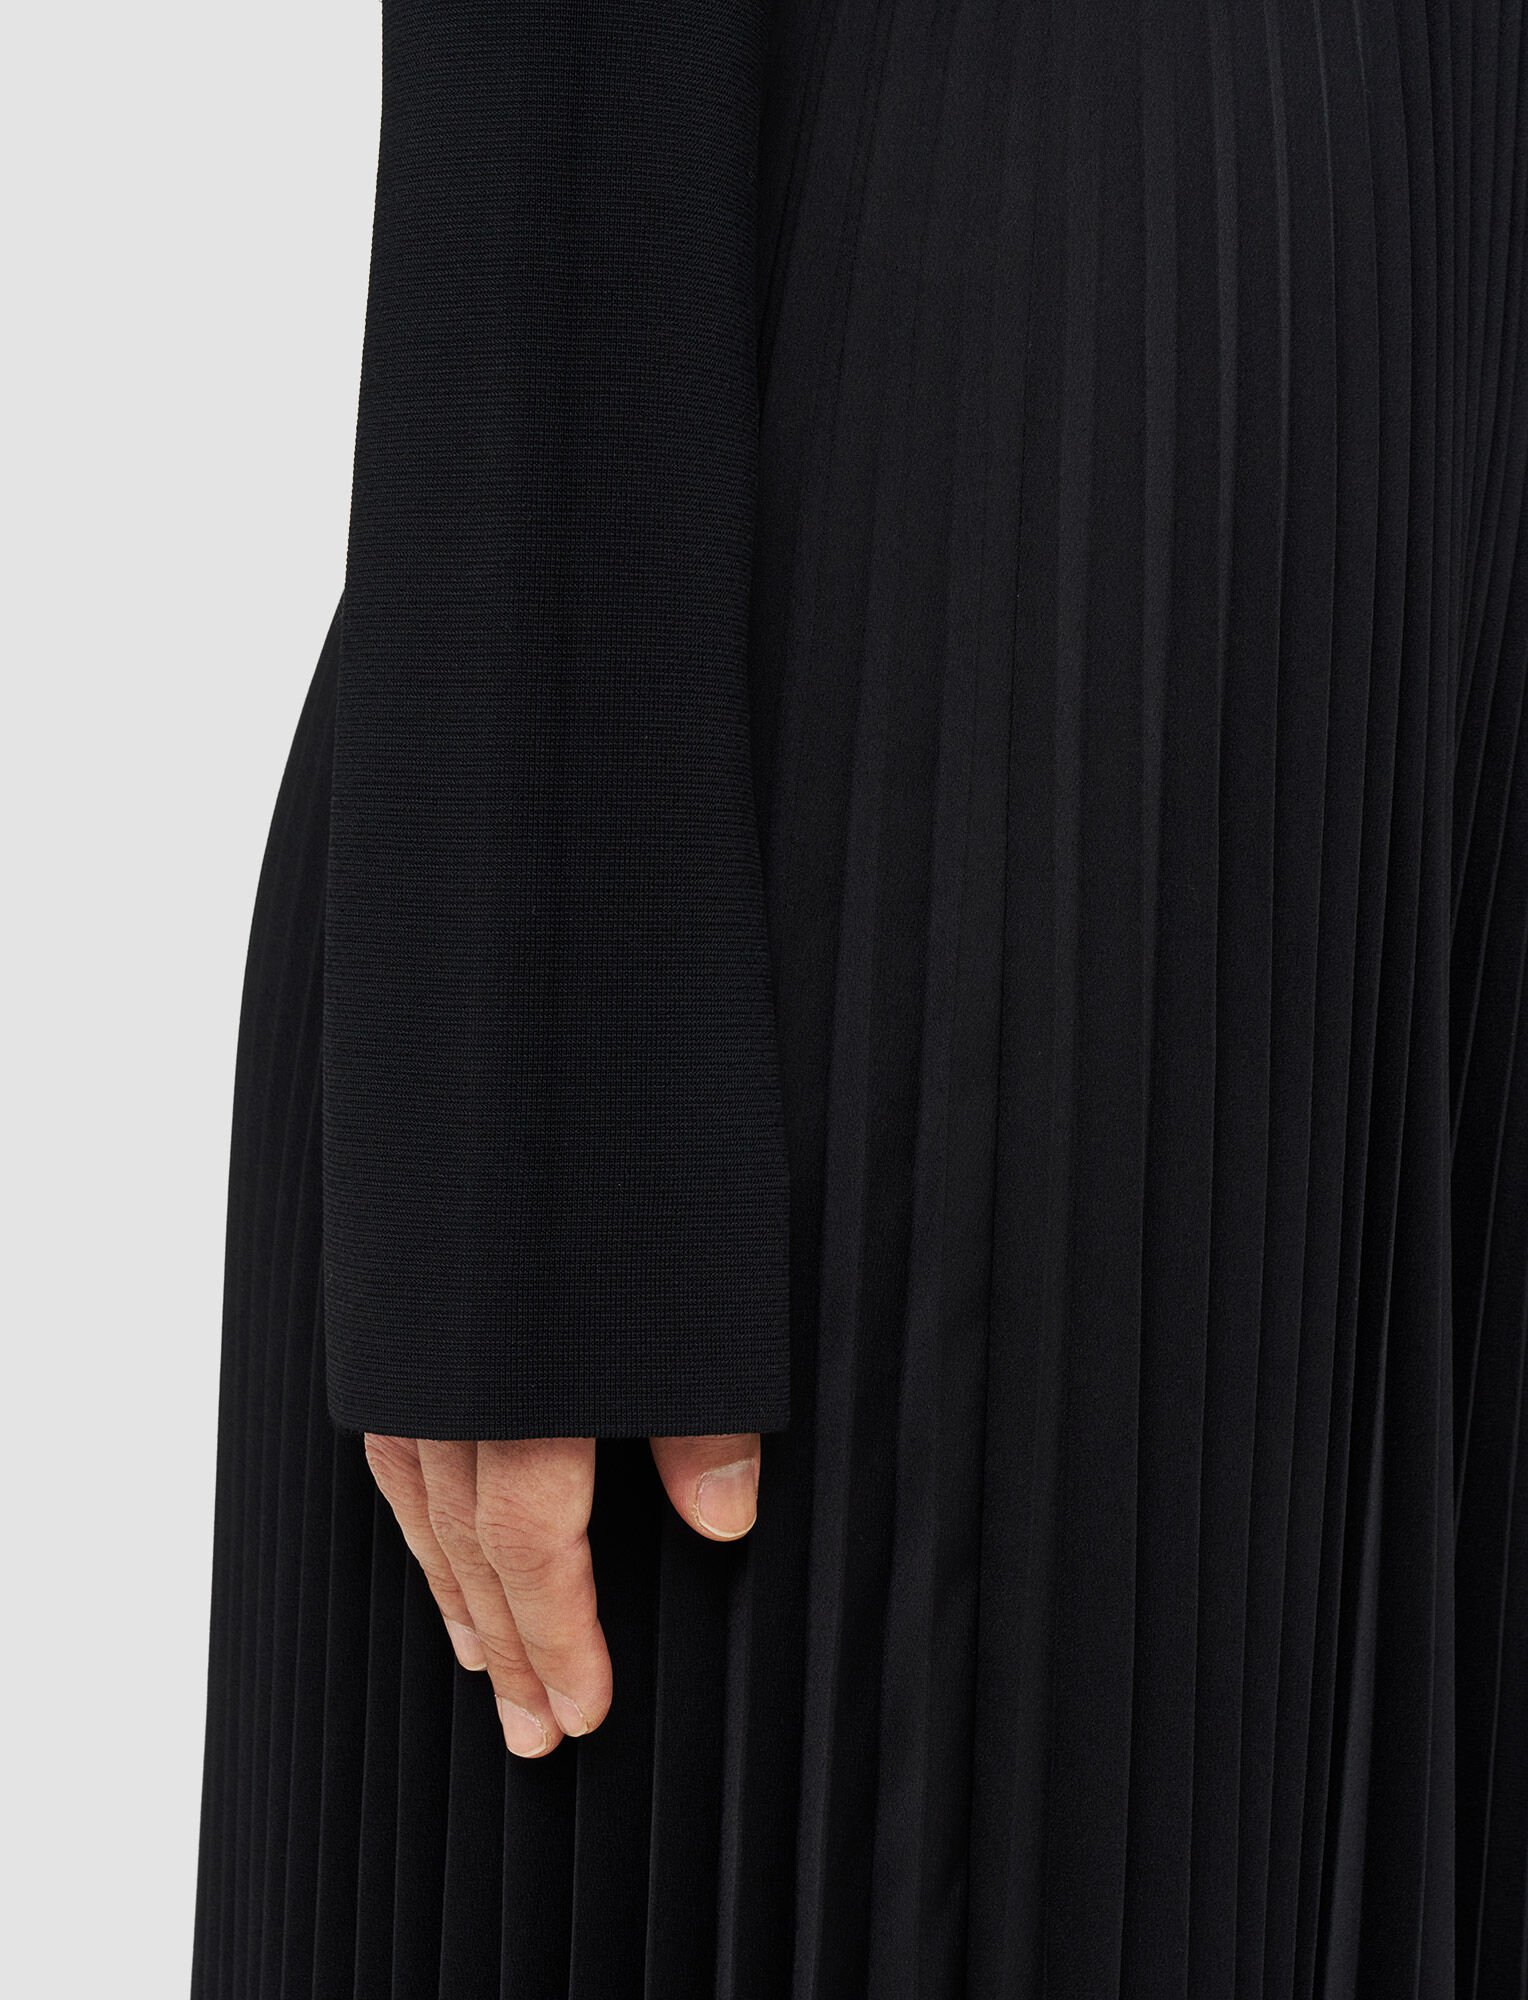 Joseph, Knit Weave Plissé Dubois Dress, in Black